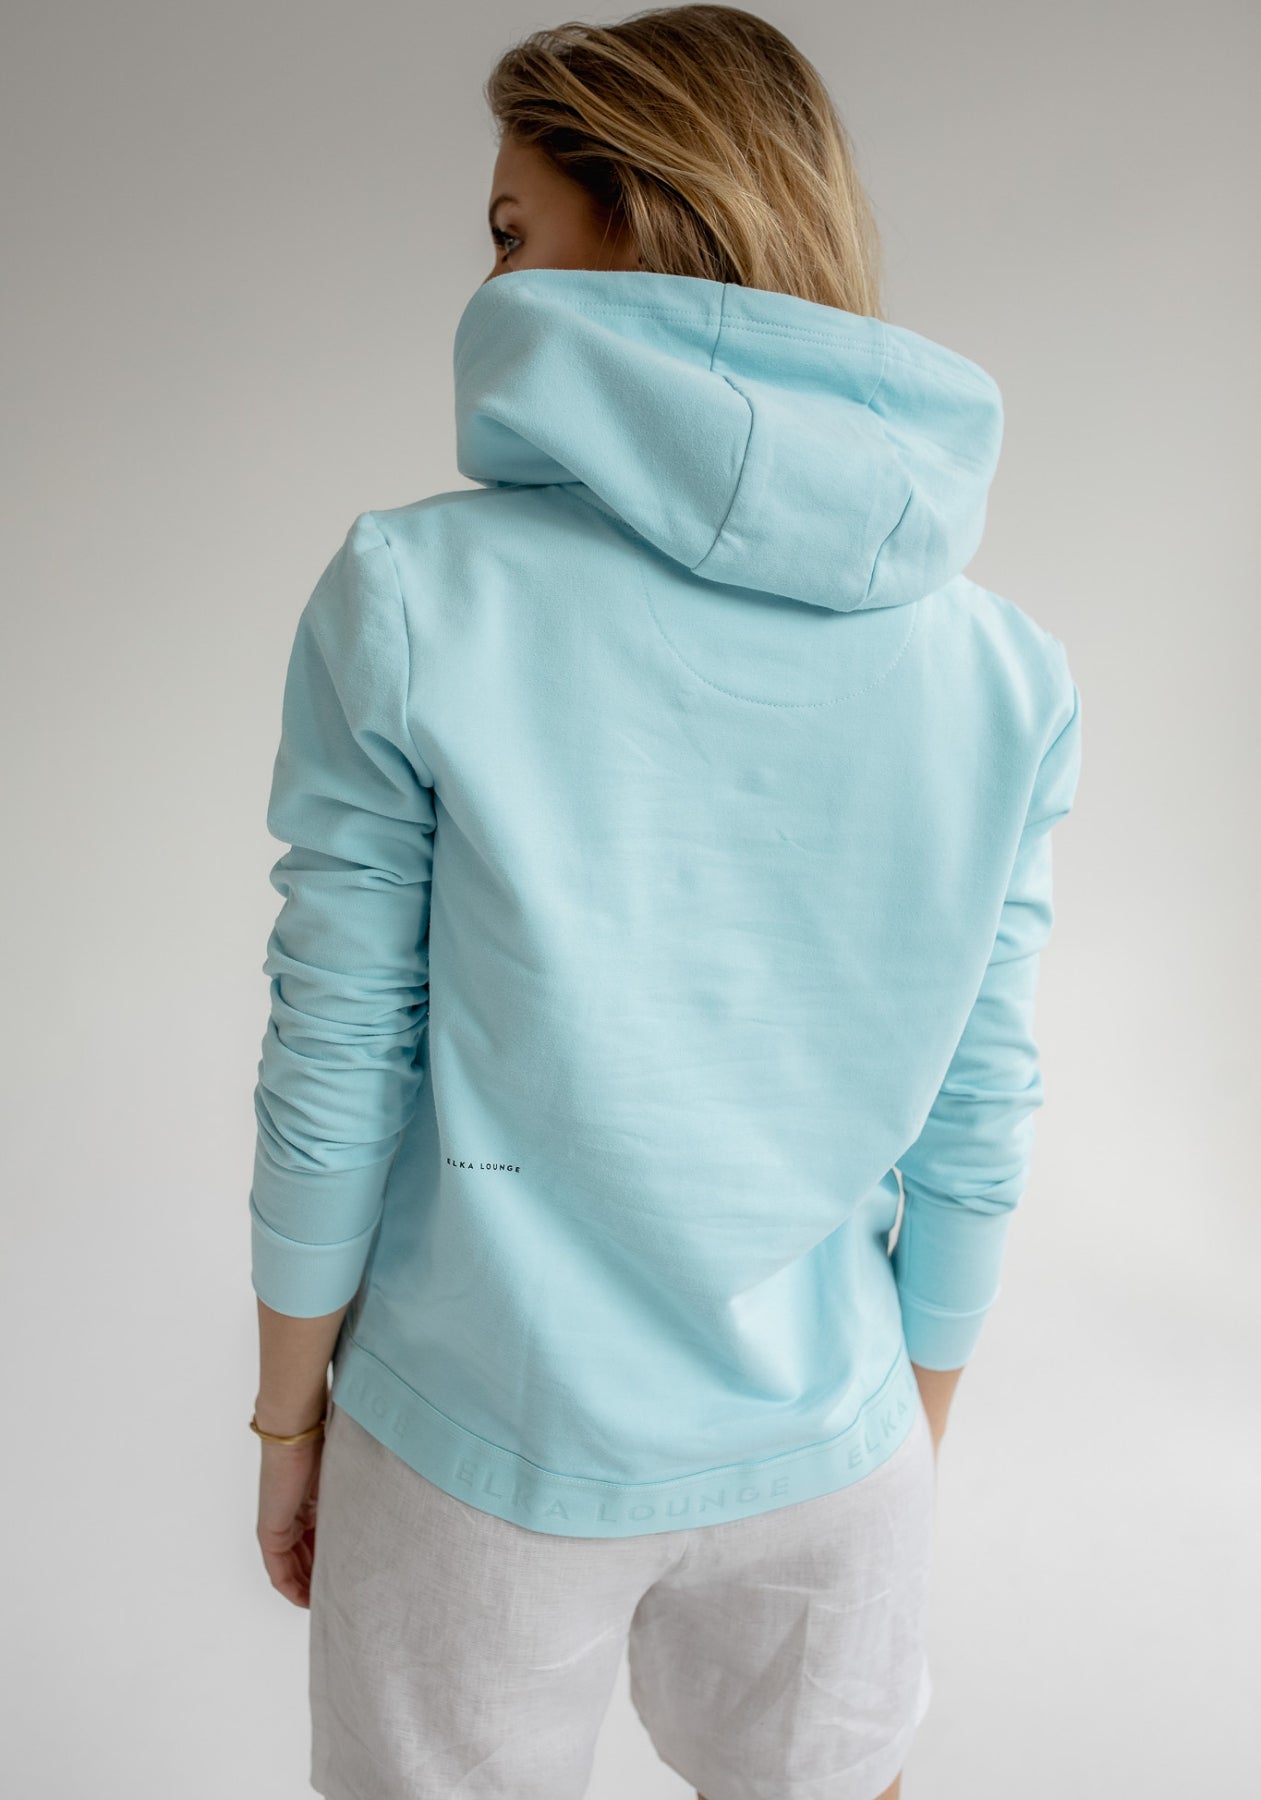 Women hoodie organic cotton Sky blue - regular